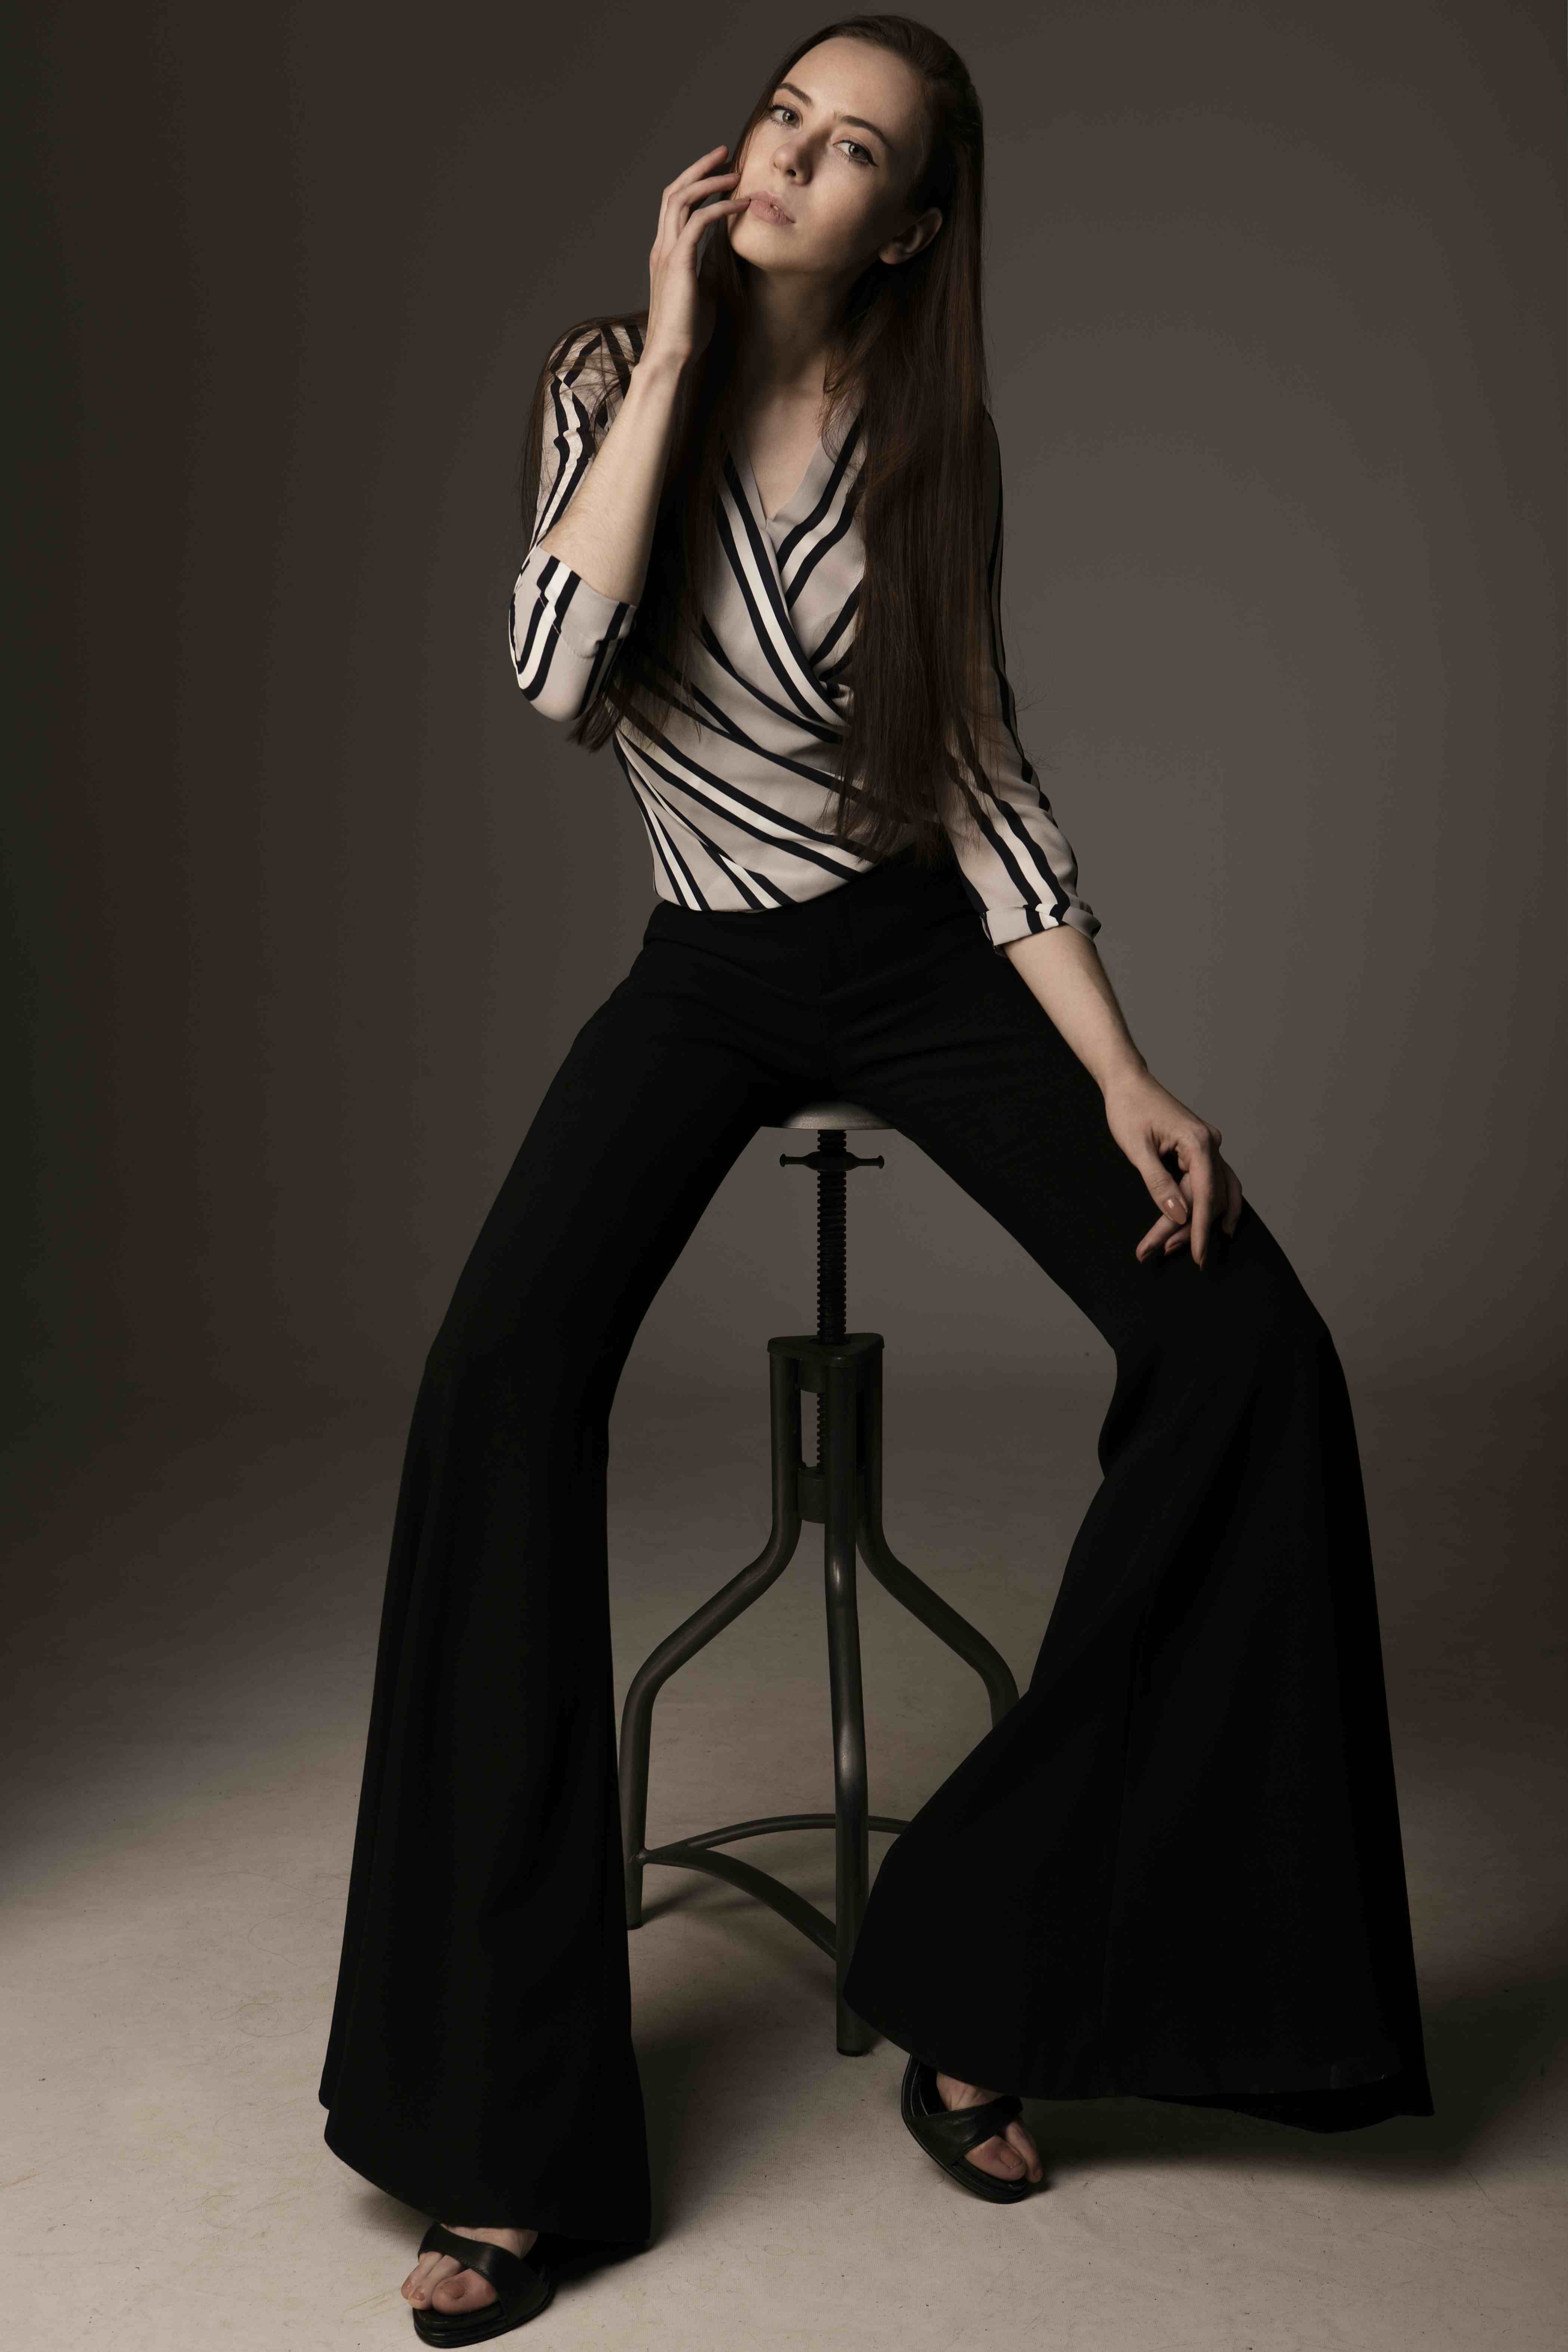 WEB-Shine-Female-Model-Editoral-designer-small-Victoria-London-01.jpg#asset:46336